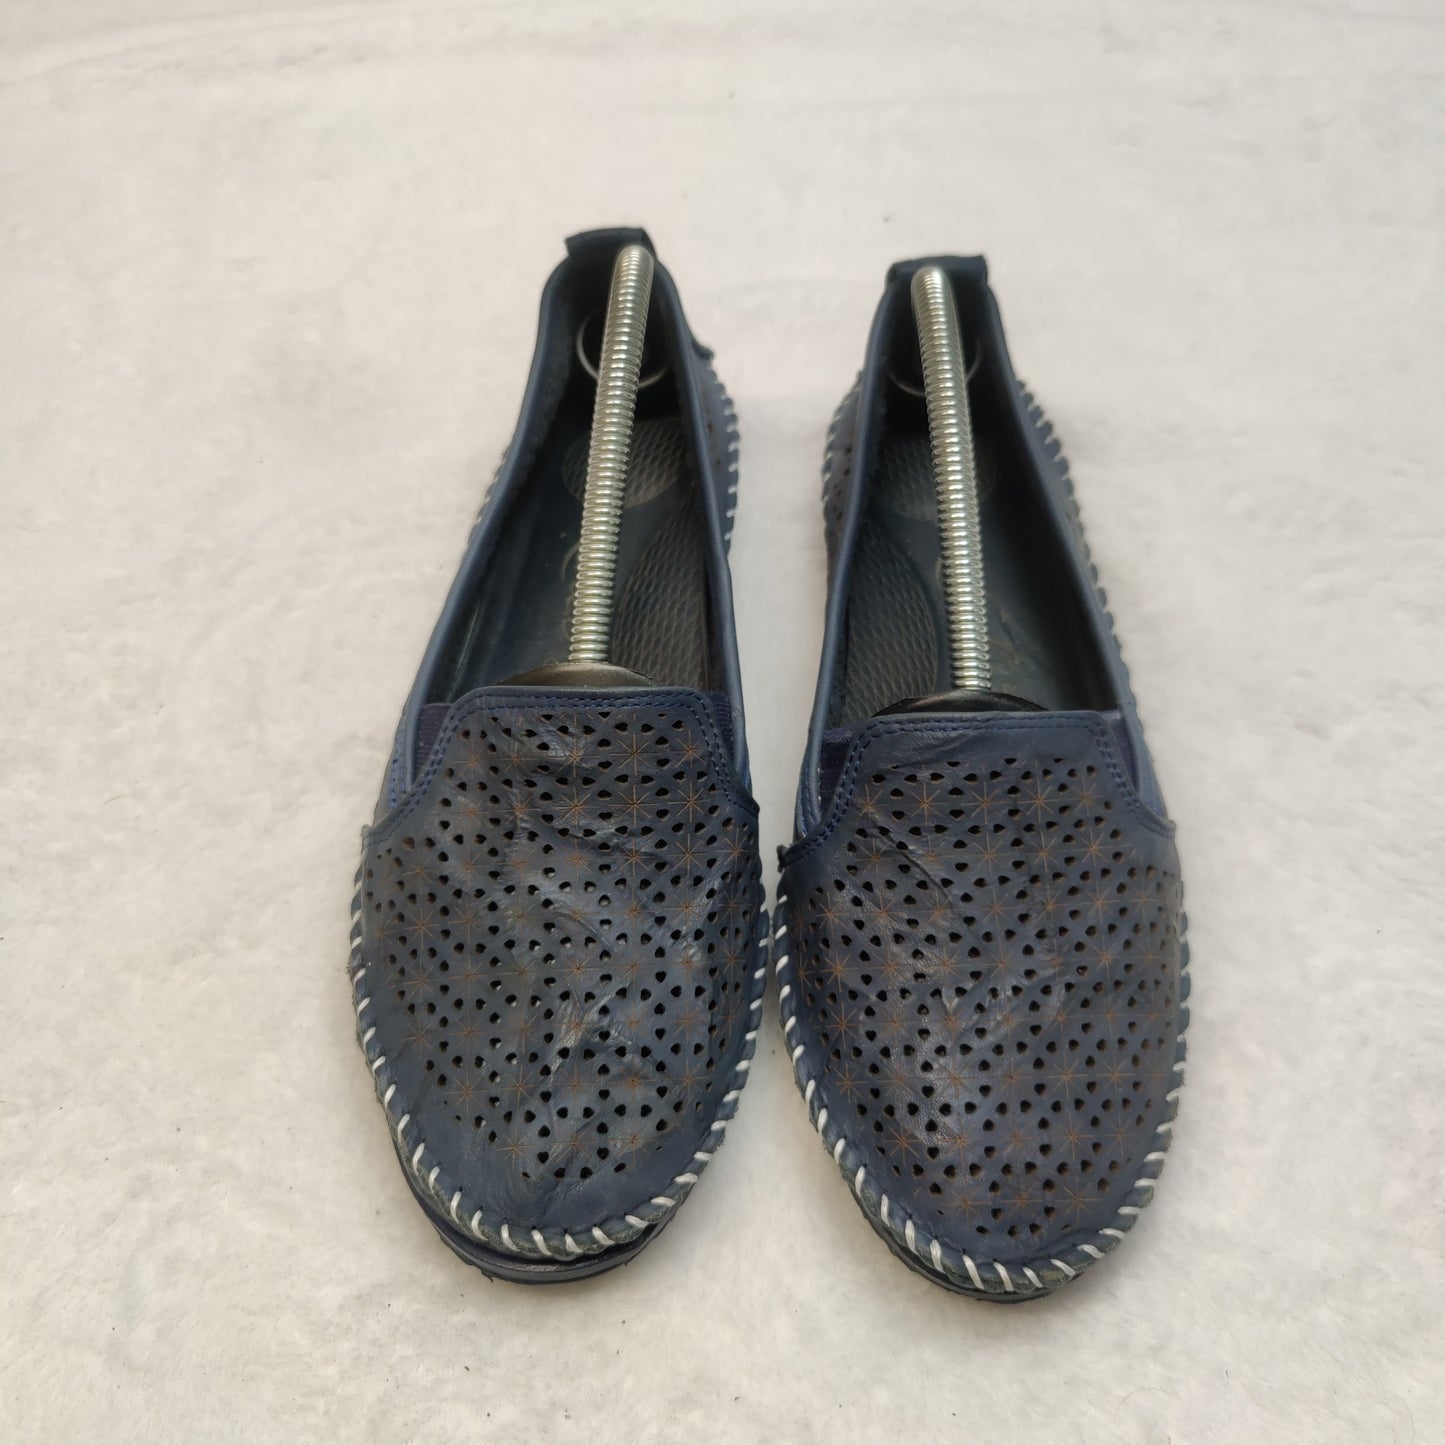 Rikel Black Flat Slip On Loafer Shoes Women Size UK 7.5 EU 41